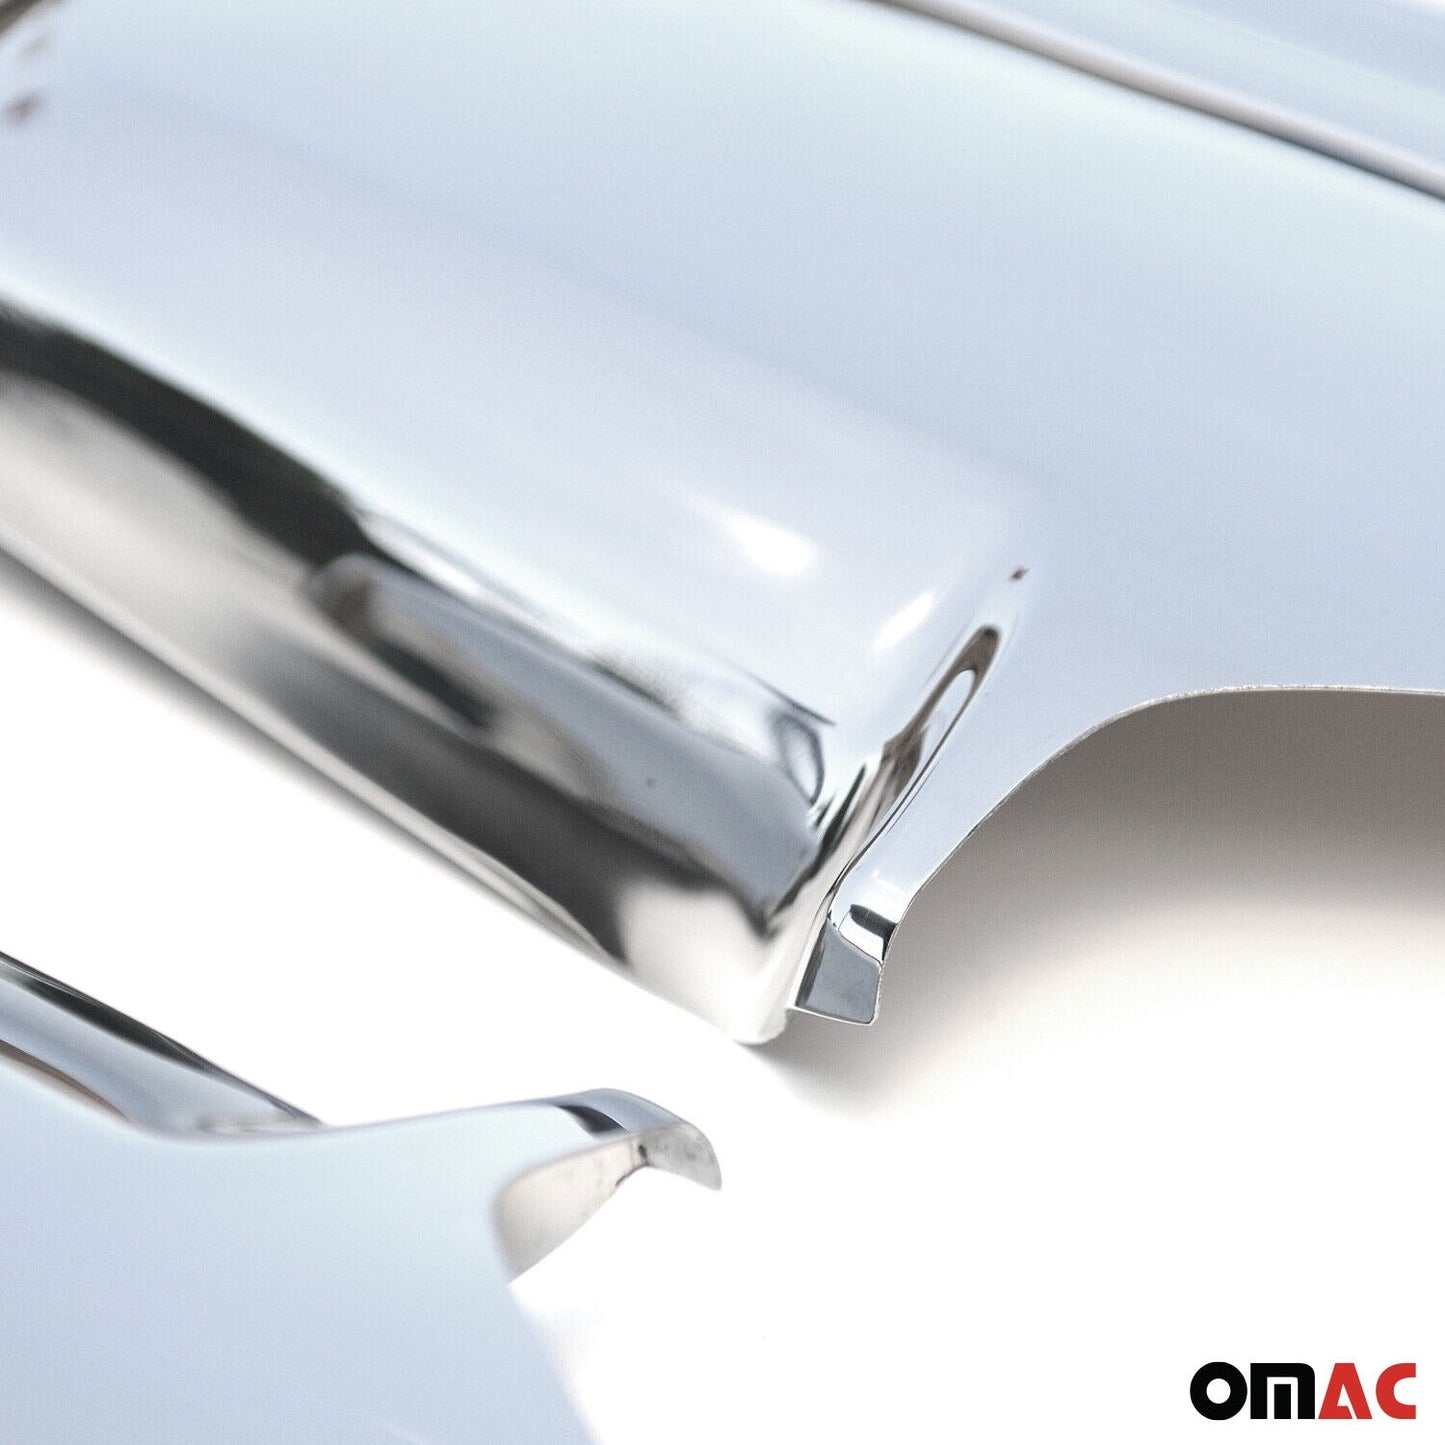 OMAC Side Mirror Cover Caps Fits Mercedes Sprinter W906 2010-2018 Chrome Silver 2 Pcs 4724112